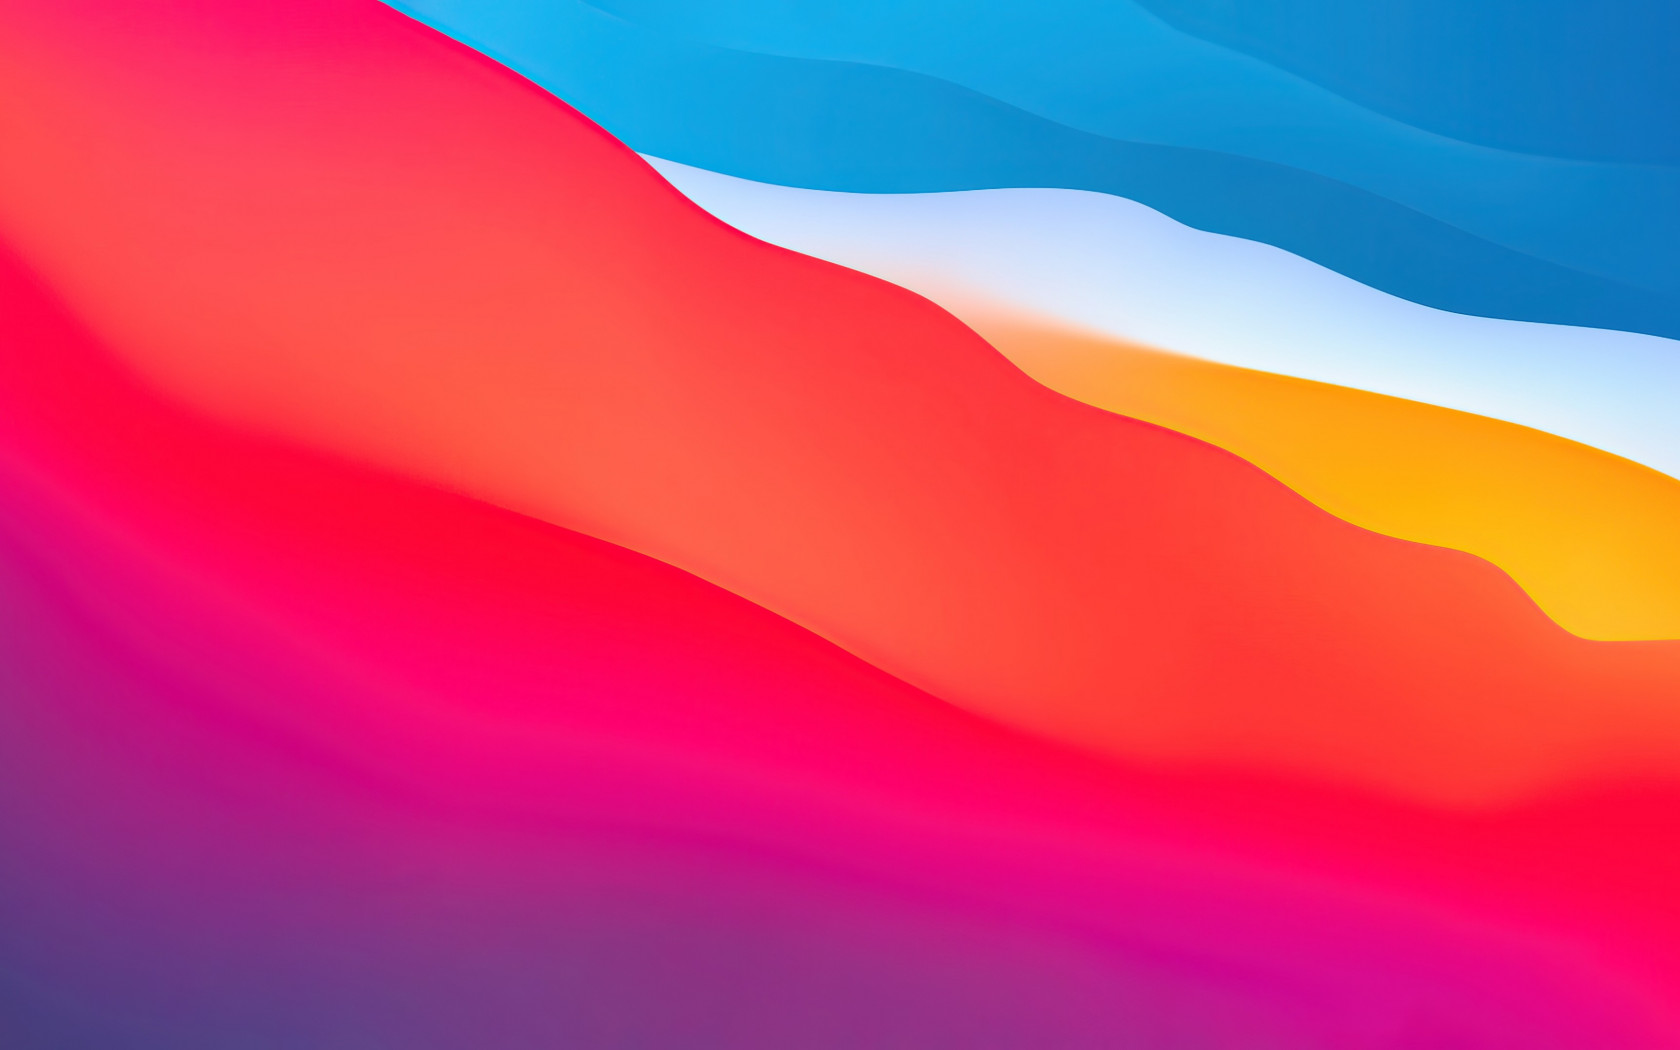 Download wallpaper: macOS Big Sur WWDC 1680x1050